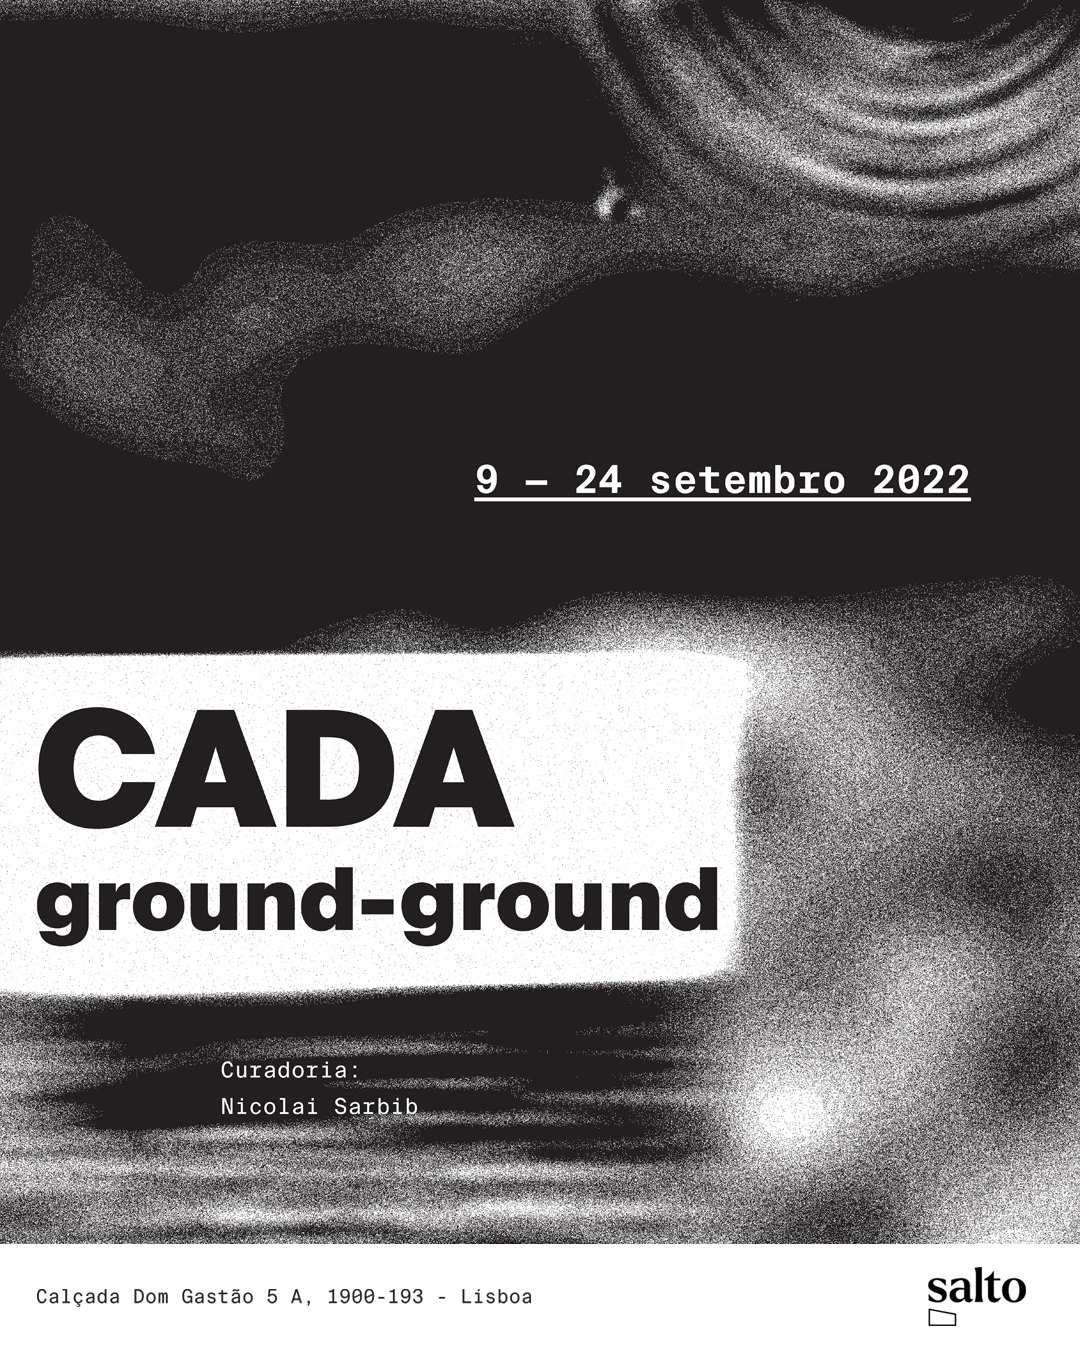 CADA ground-ground